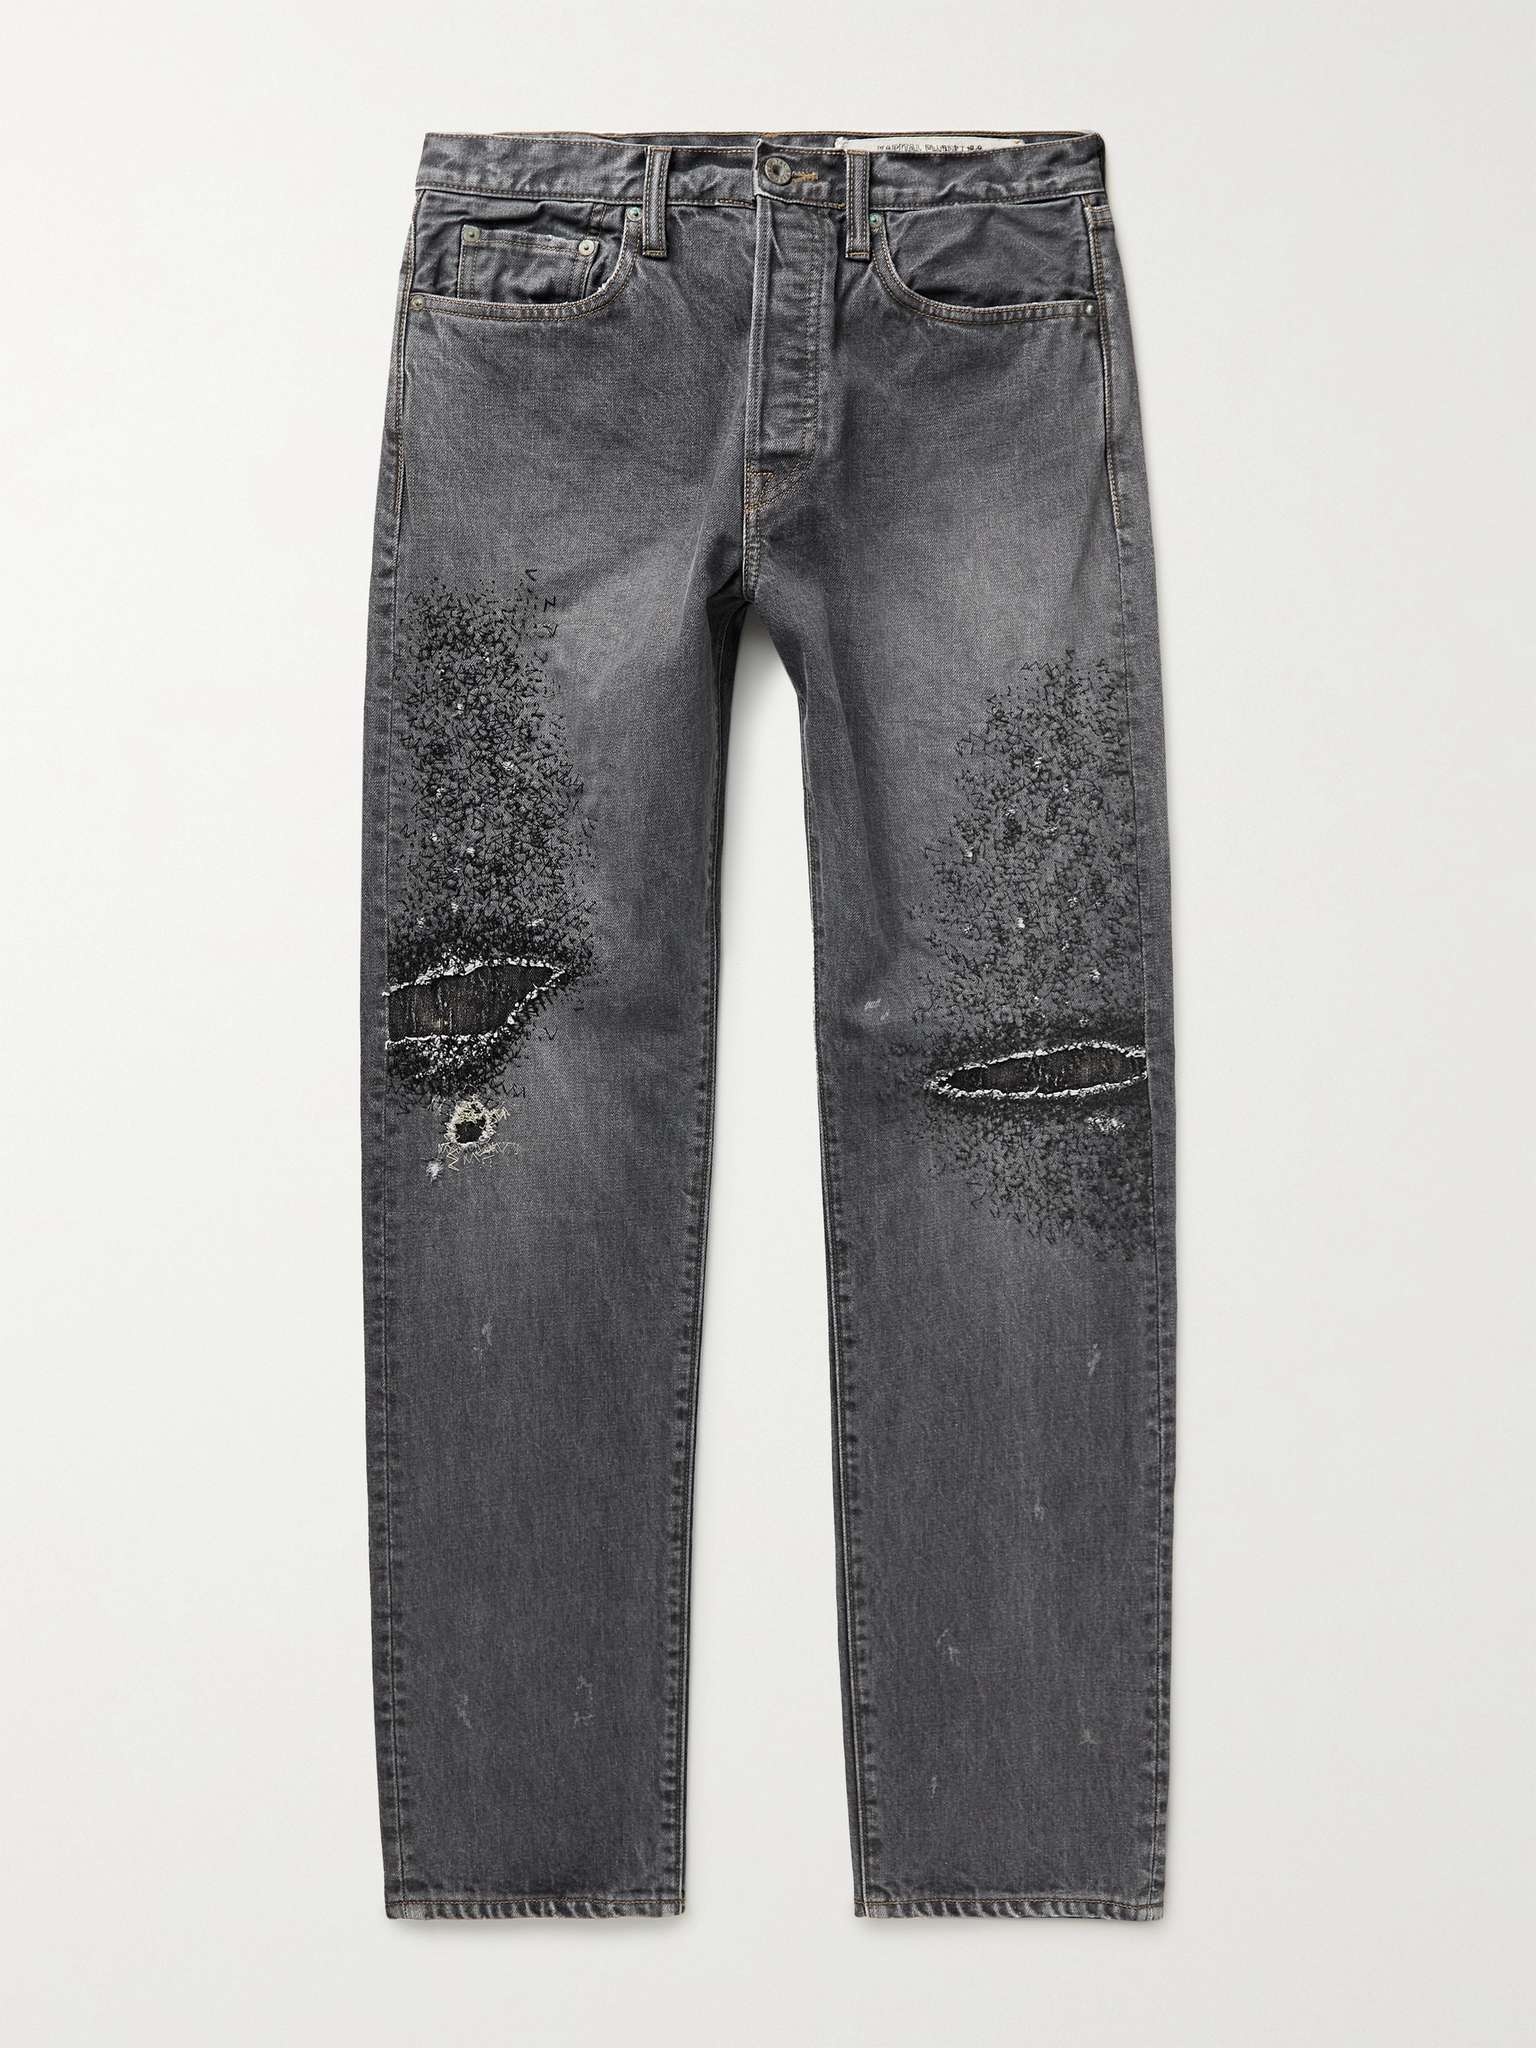 Monkey CISCO Distressed Denim Jeans - 1